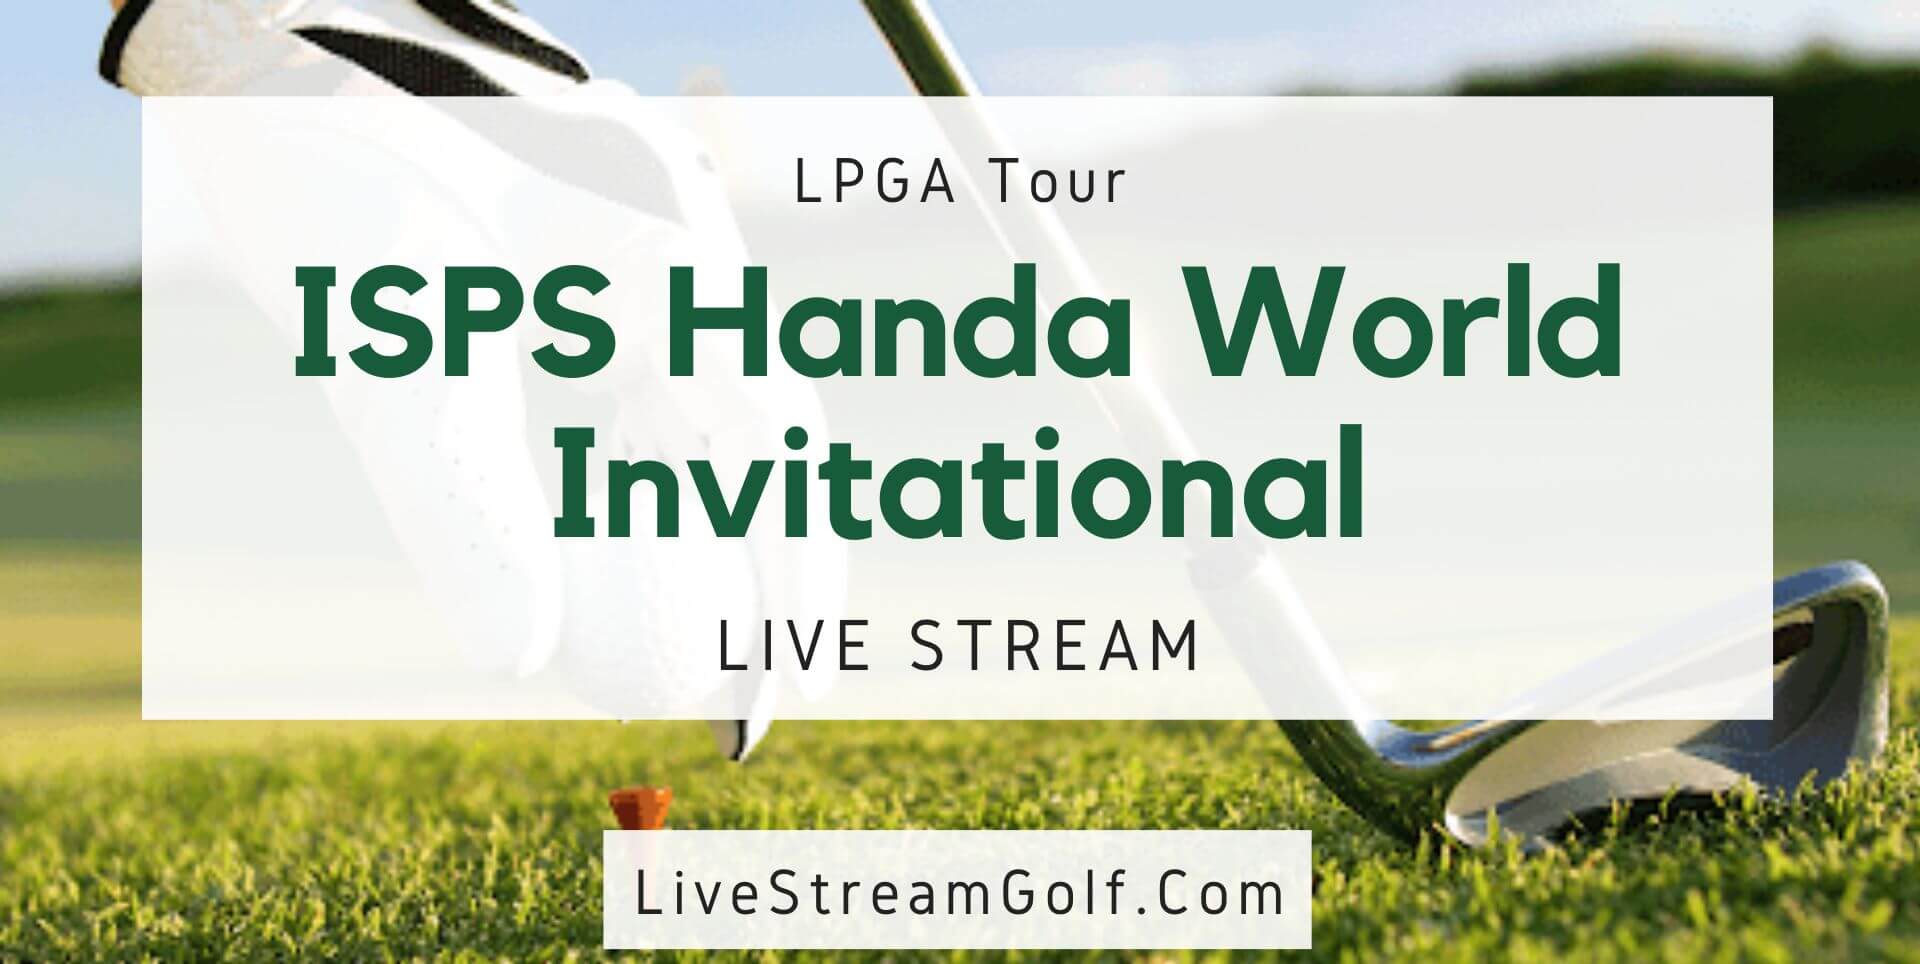 ISPS Handa World Invitational Day 2 Live Stream: LPGA Tour 2022